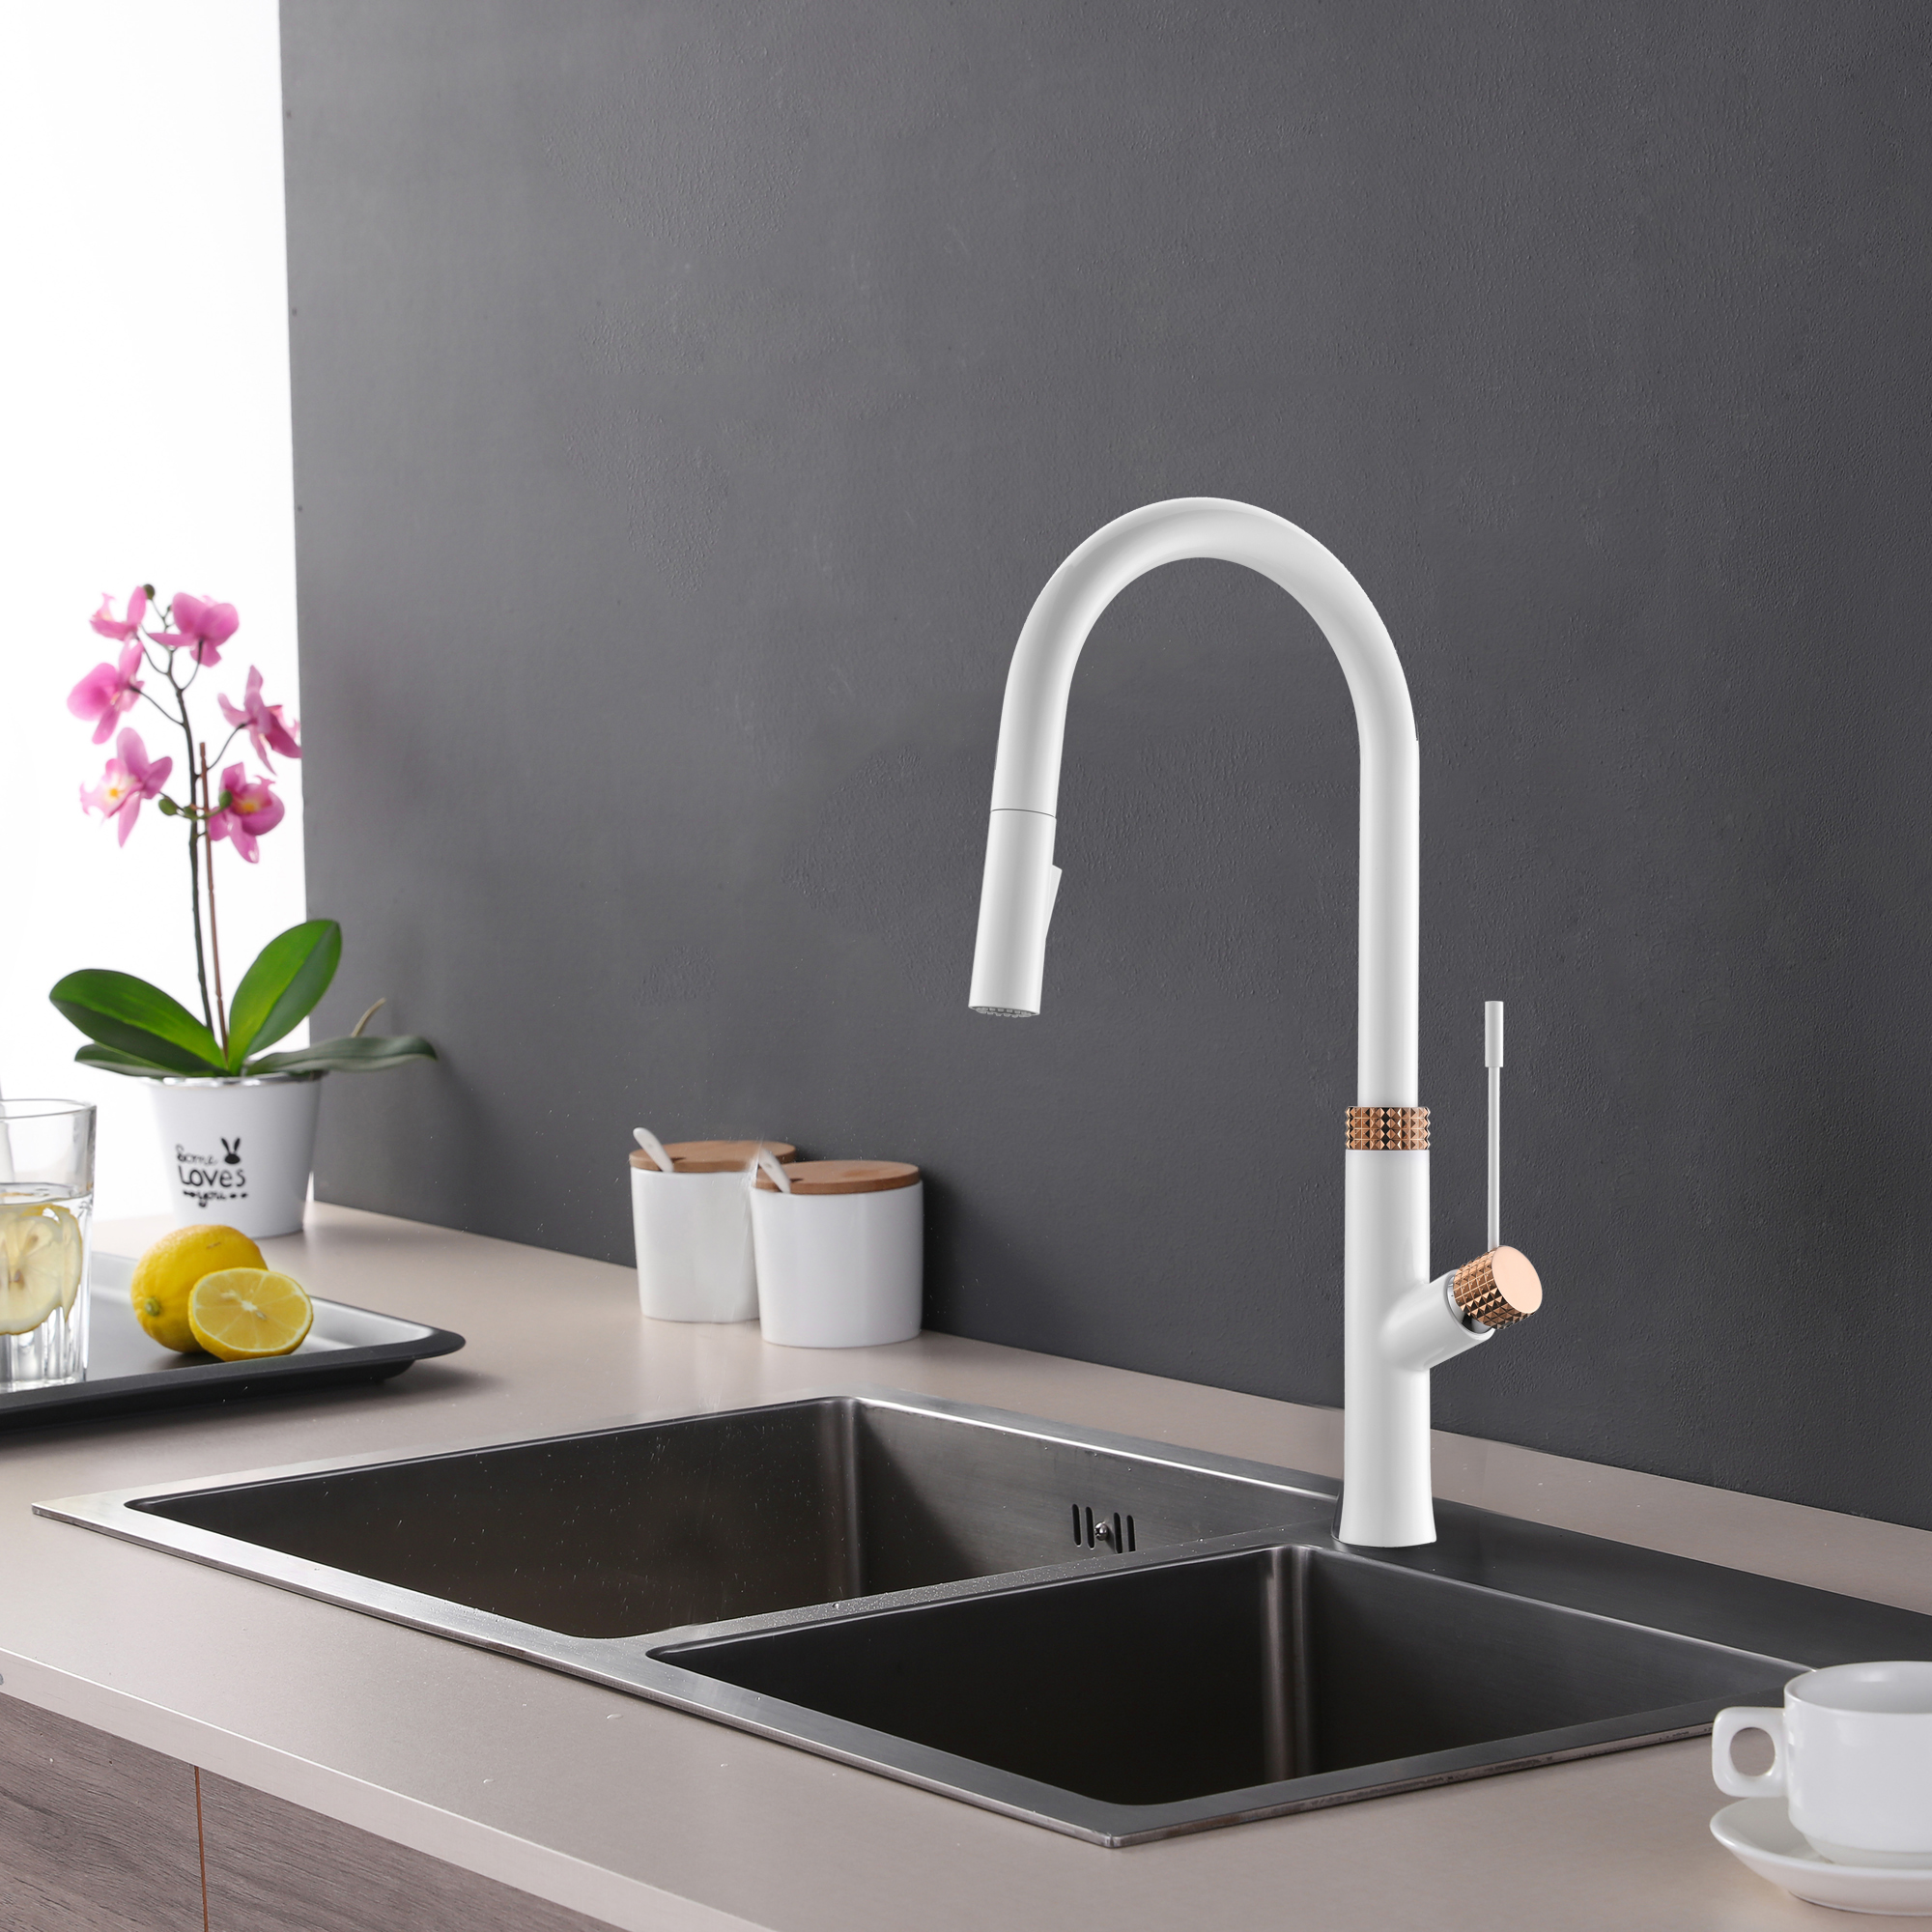 New Design Brass Sink Faucet Avec Filtre Et Deux Sorties Water Filter Tap Kitchen Mixer With Cupc Certificate